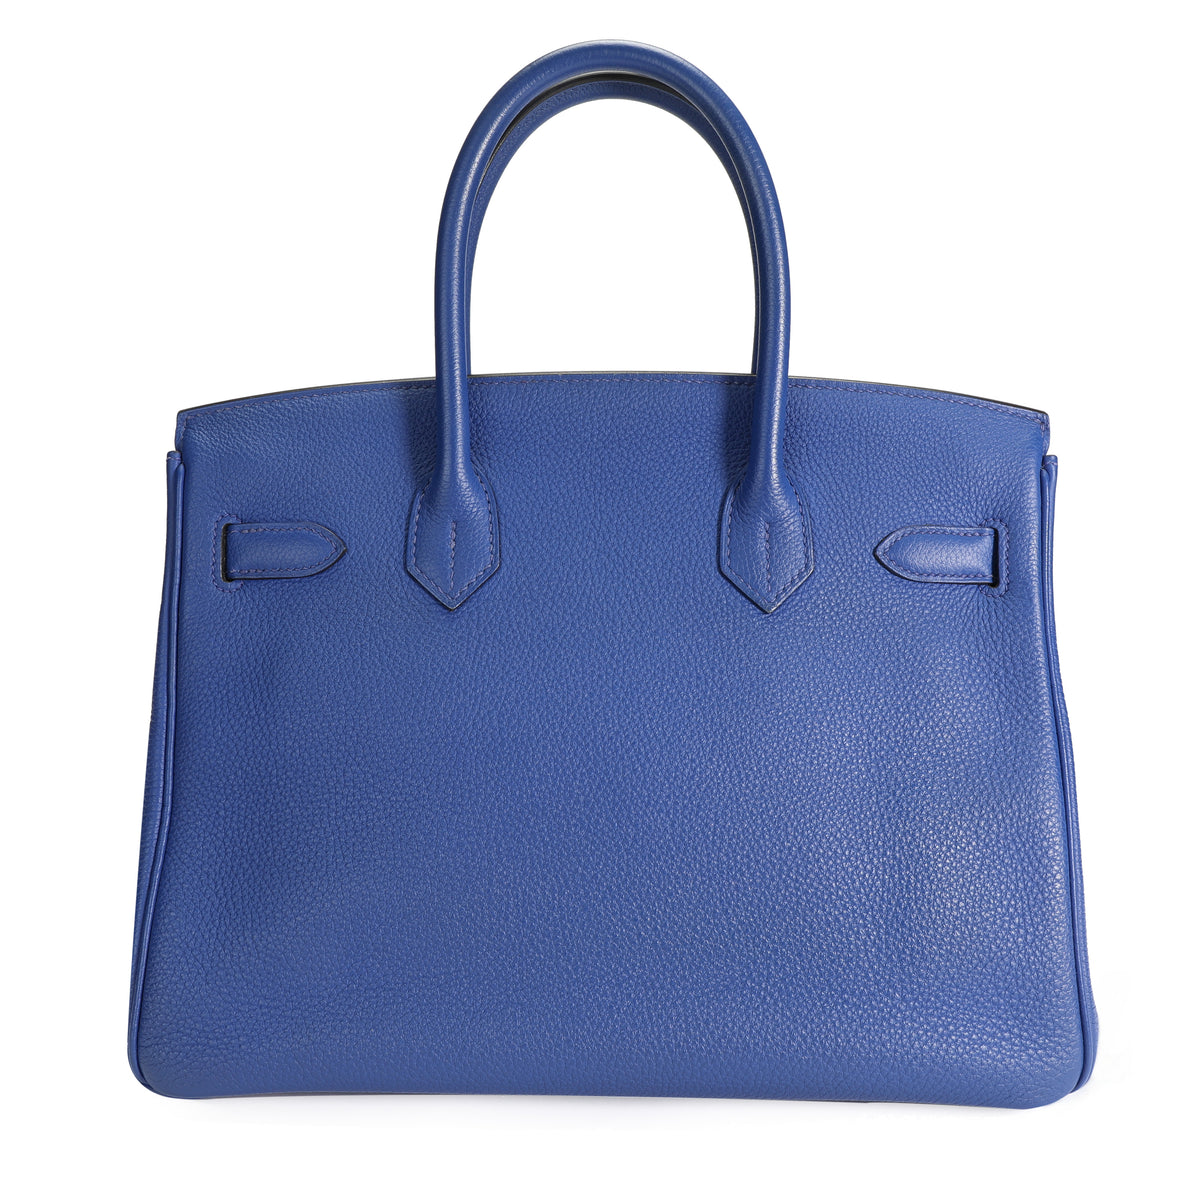 Hermès Bleu Électrique Clémence Birkin 30 with Palladium Hardware